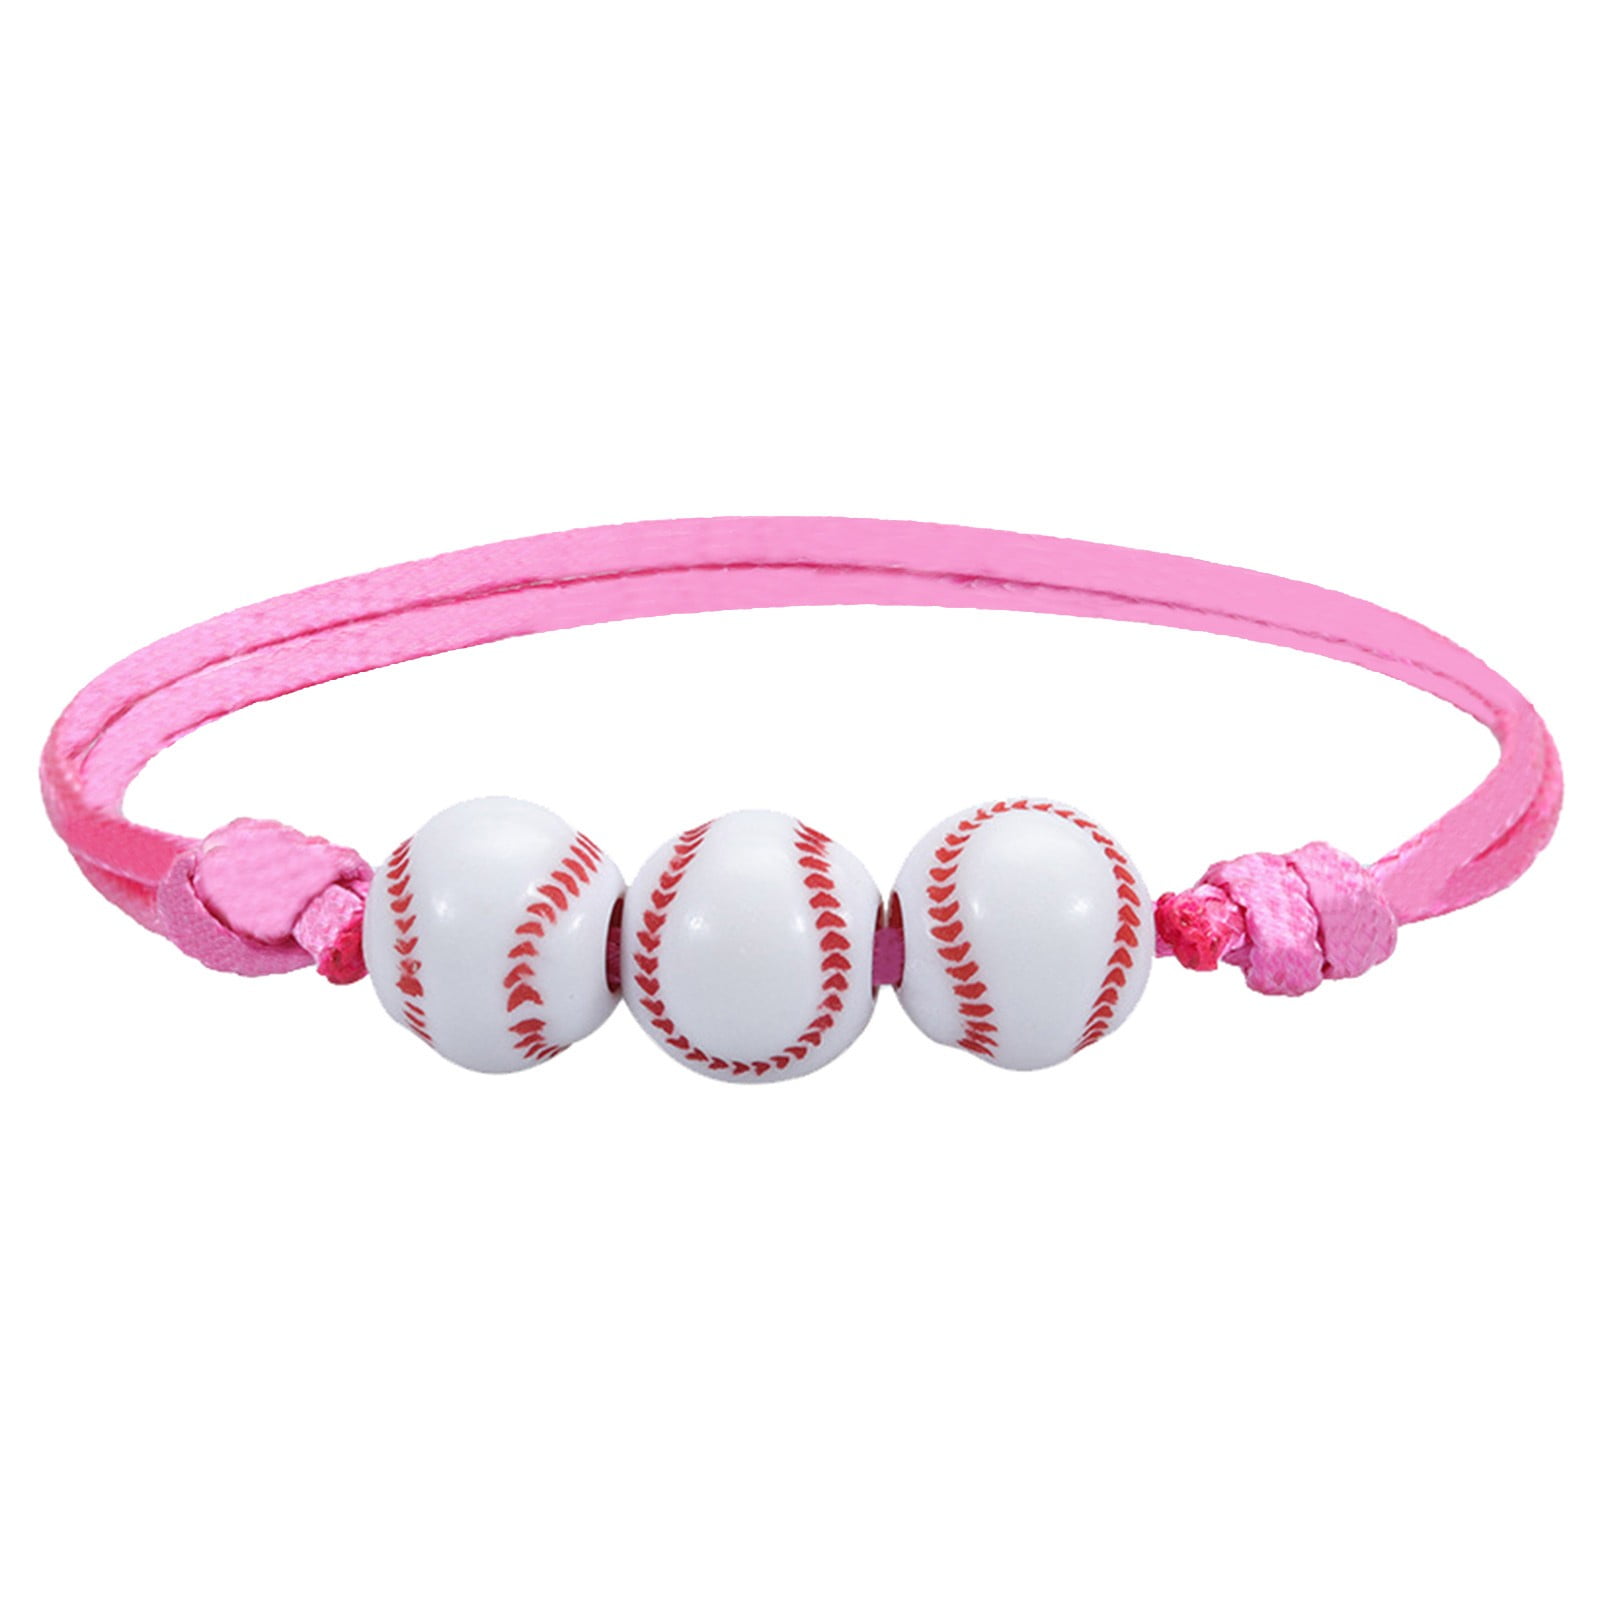 Lot 2 NEW Girls Pink FRIENDSHIP BRACELET Beads Baseballs SPORTS Multi-Color  1